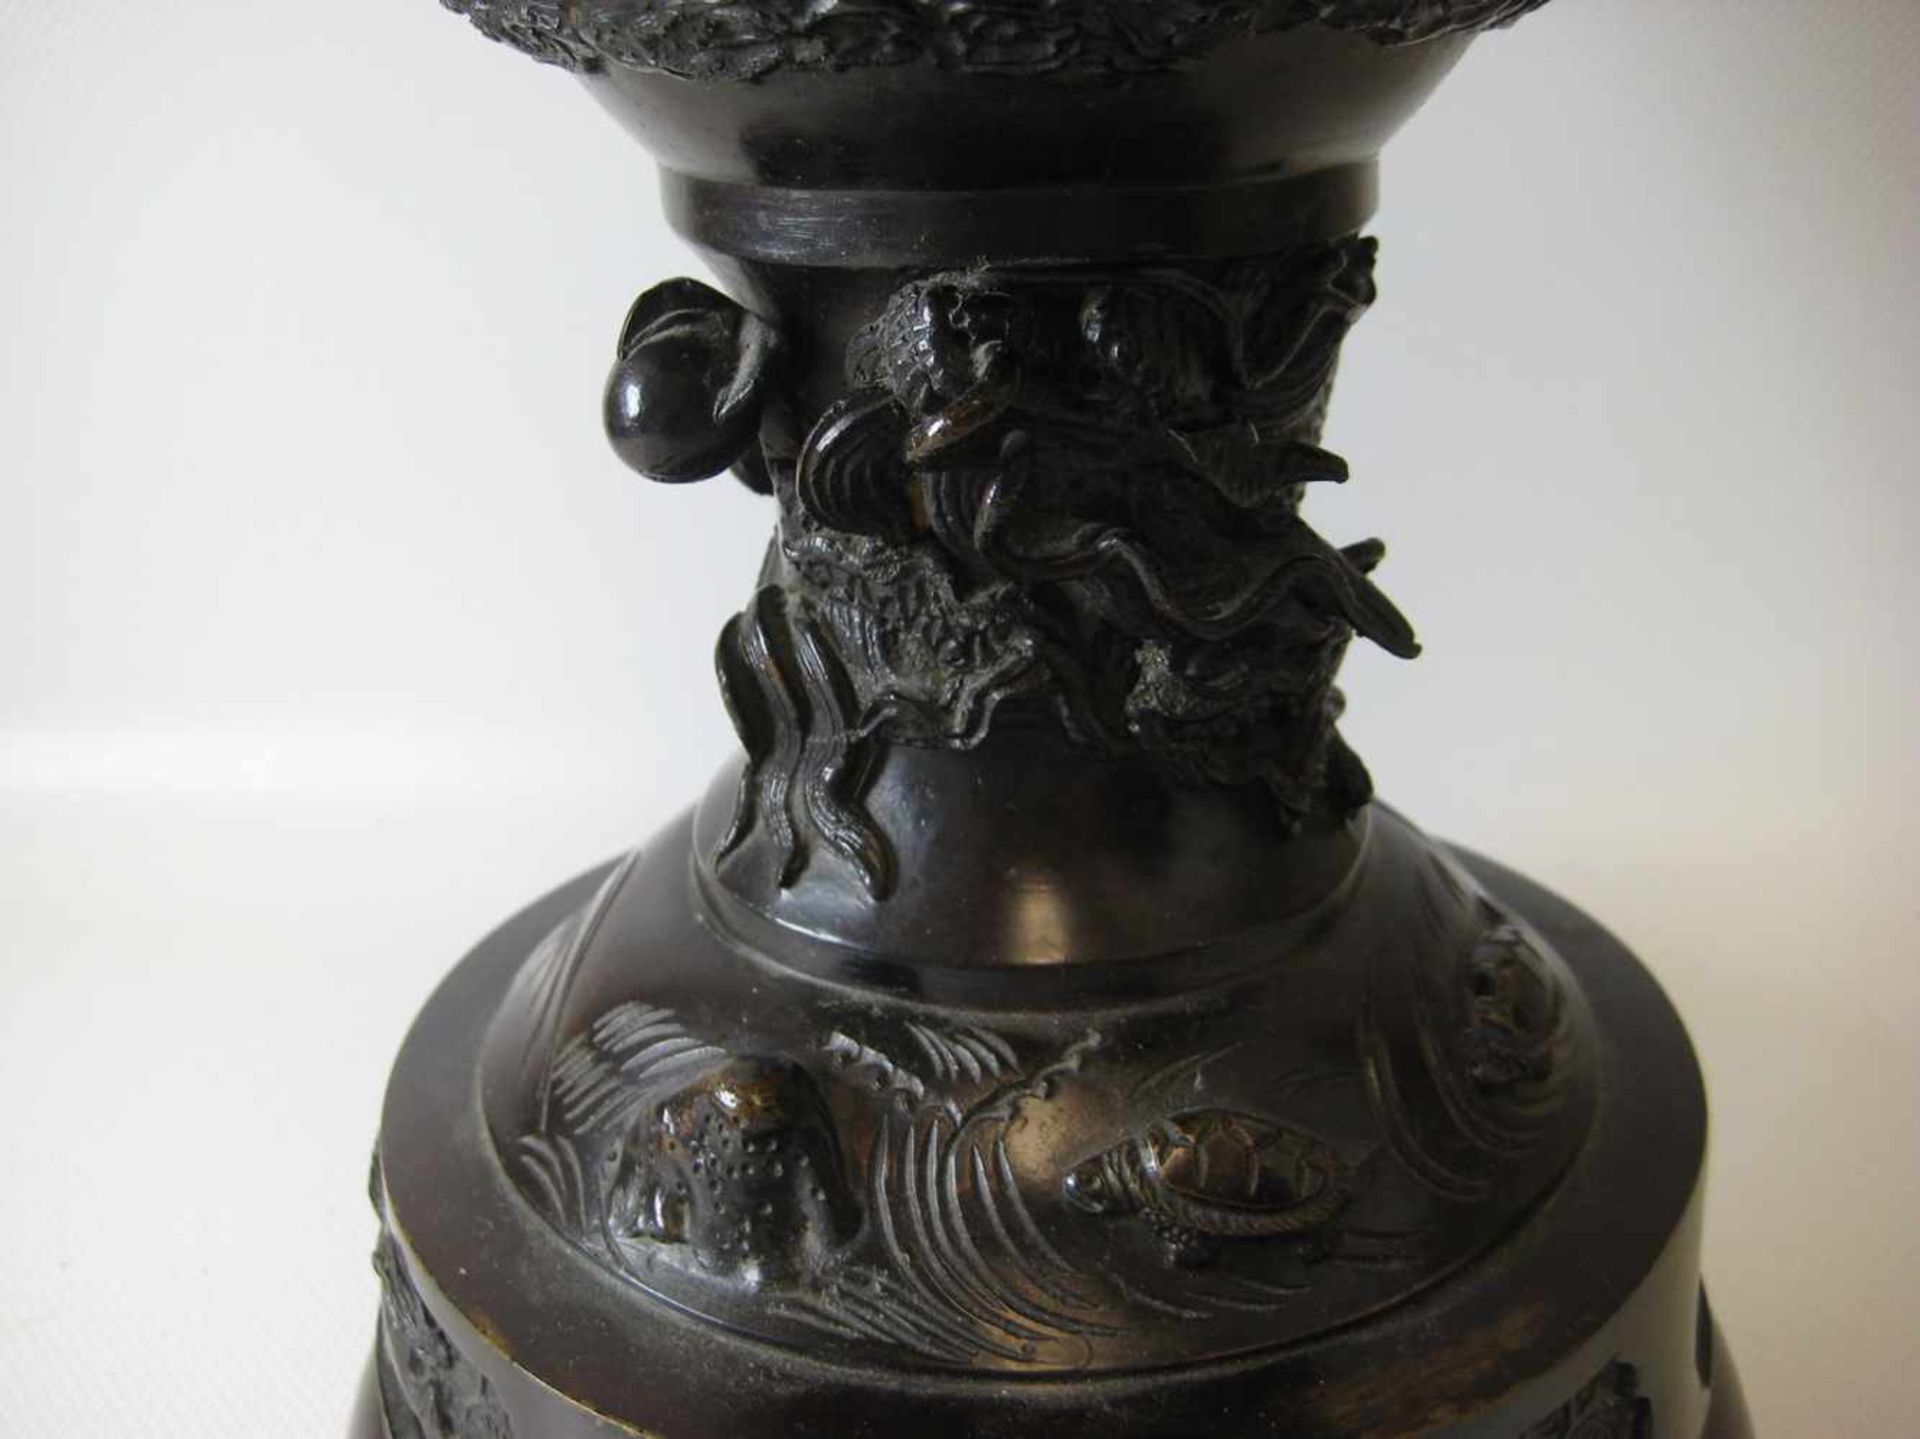 Lampe, China, um 1900, Bronze reich verziert, h 48 cm, d 24,5 cm.- - -19.00 % buyer's premium on the - Image 3 of 3